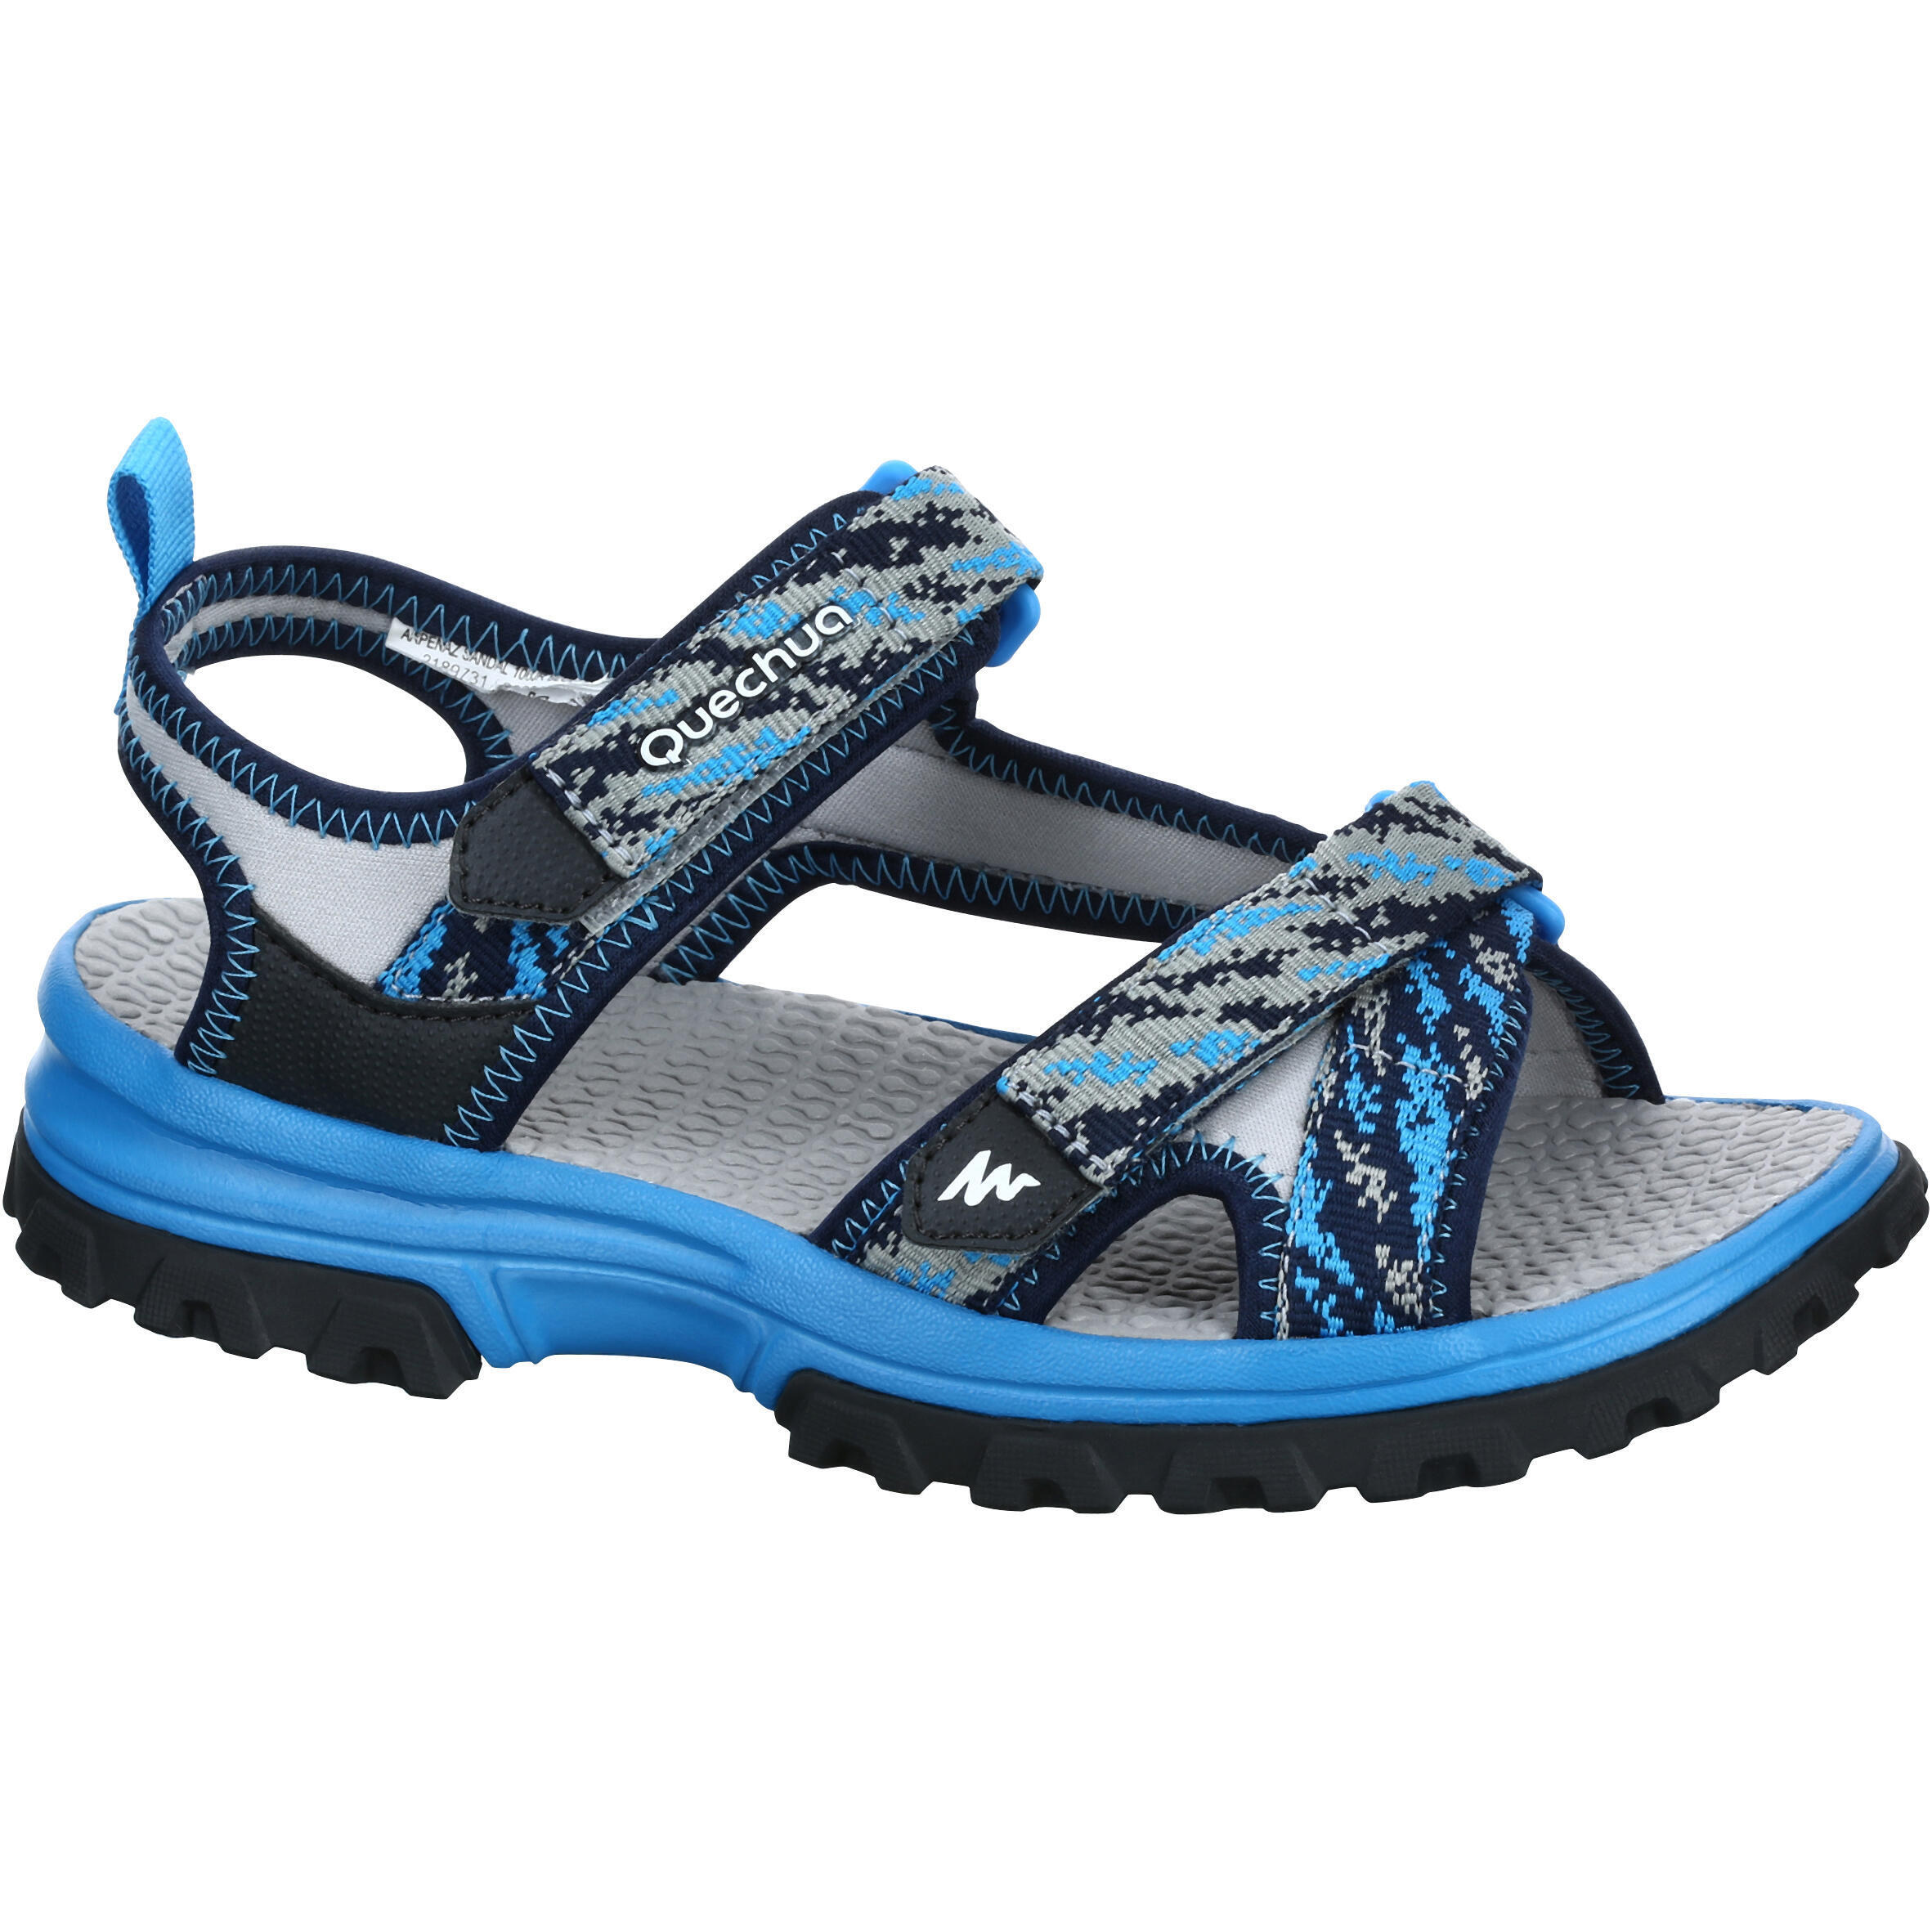 QUECHUA Kids’ Hiking Sandals MH120 TW  - Jr size 10 TO Adult size 6 - Blue